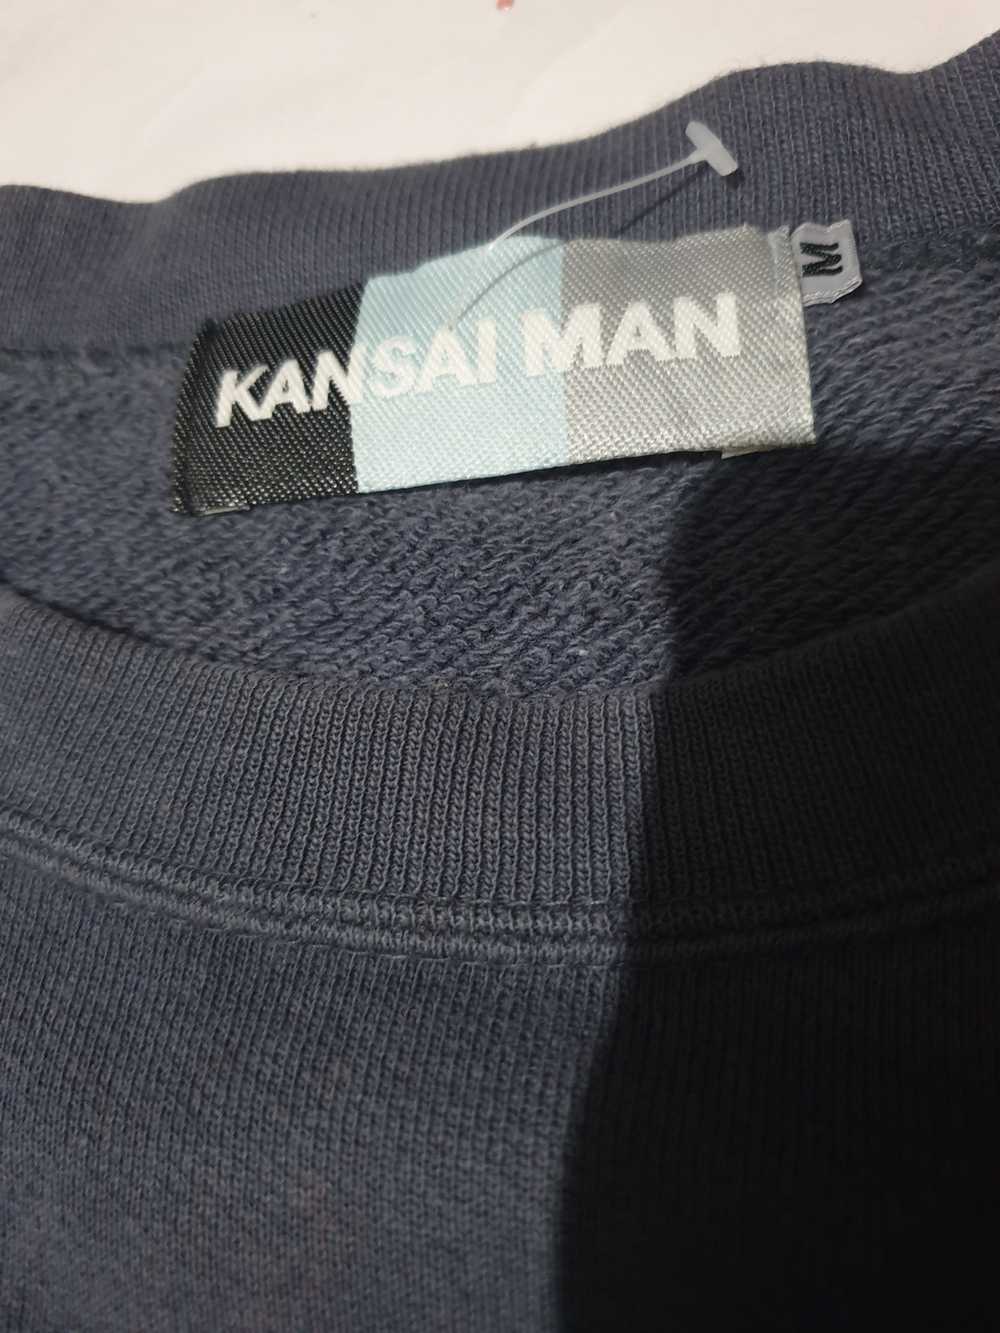 Kansai Yamamoto × Streetwear Kansaiman by kansai … - image 3